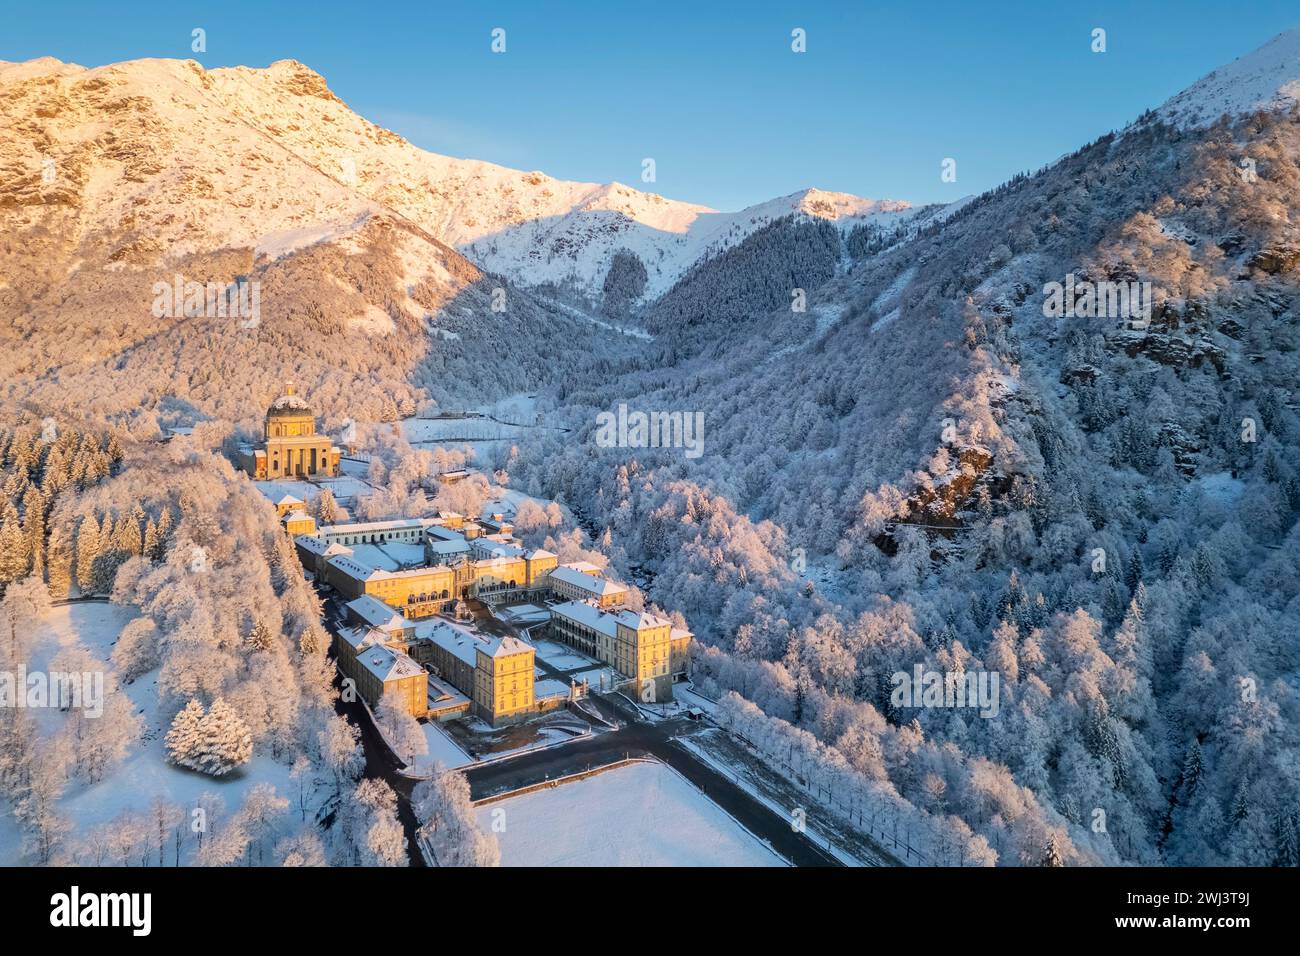 Aerial view of the Sanctuary of Oropa in winter at dawn. Biella, Biella district, Piedmont, Italy, Europe. Stock Photo